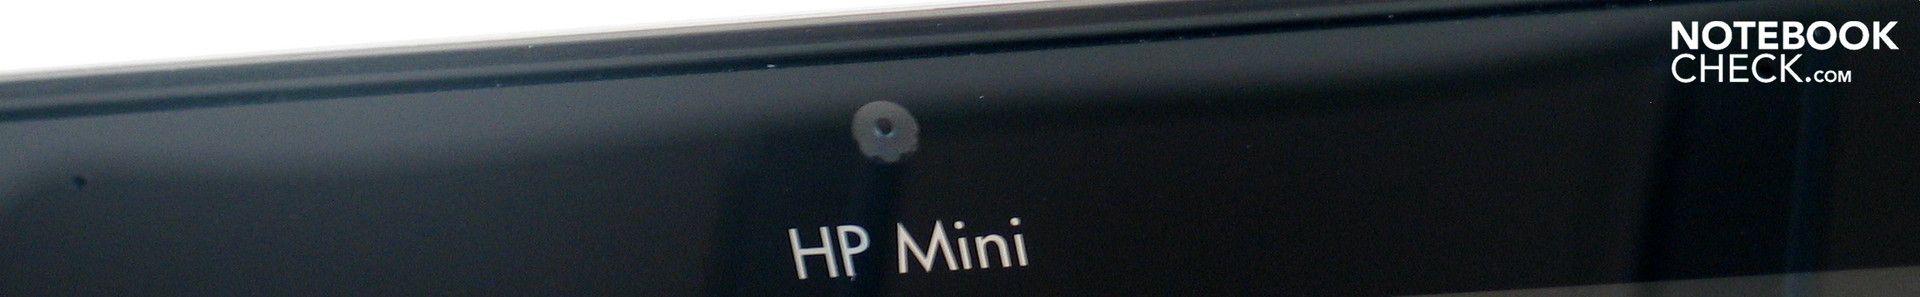 HP Mini 2140 Intel Atom N270 Drivers